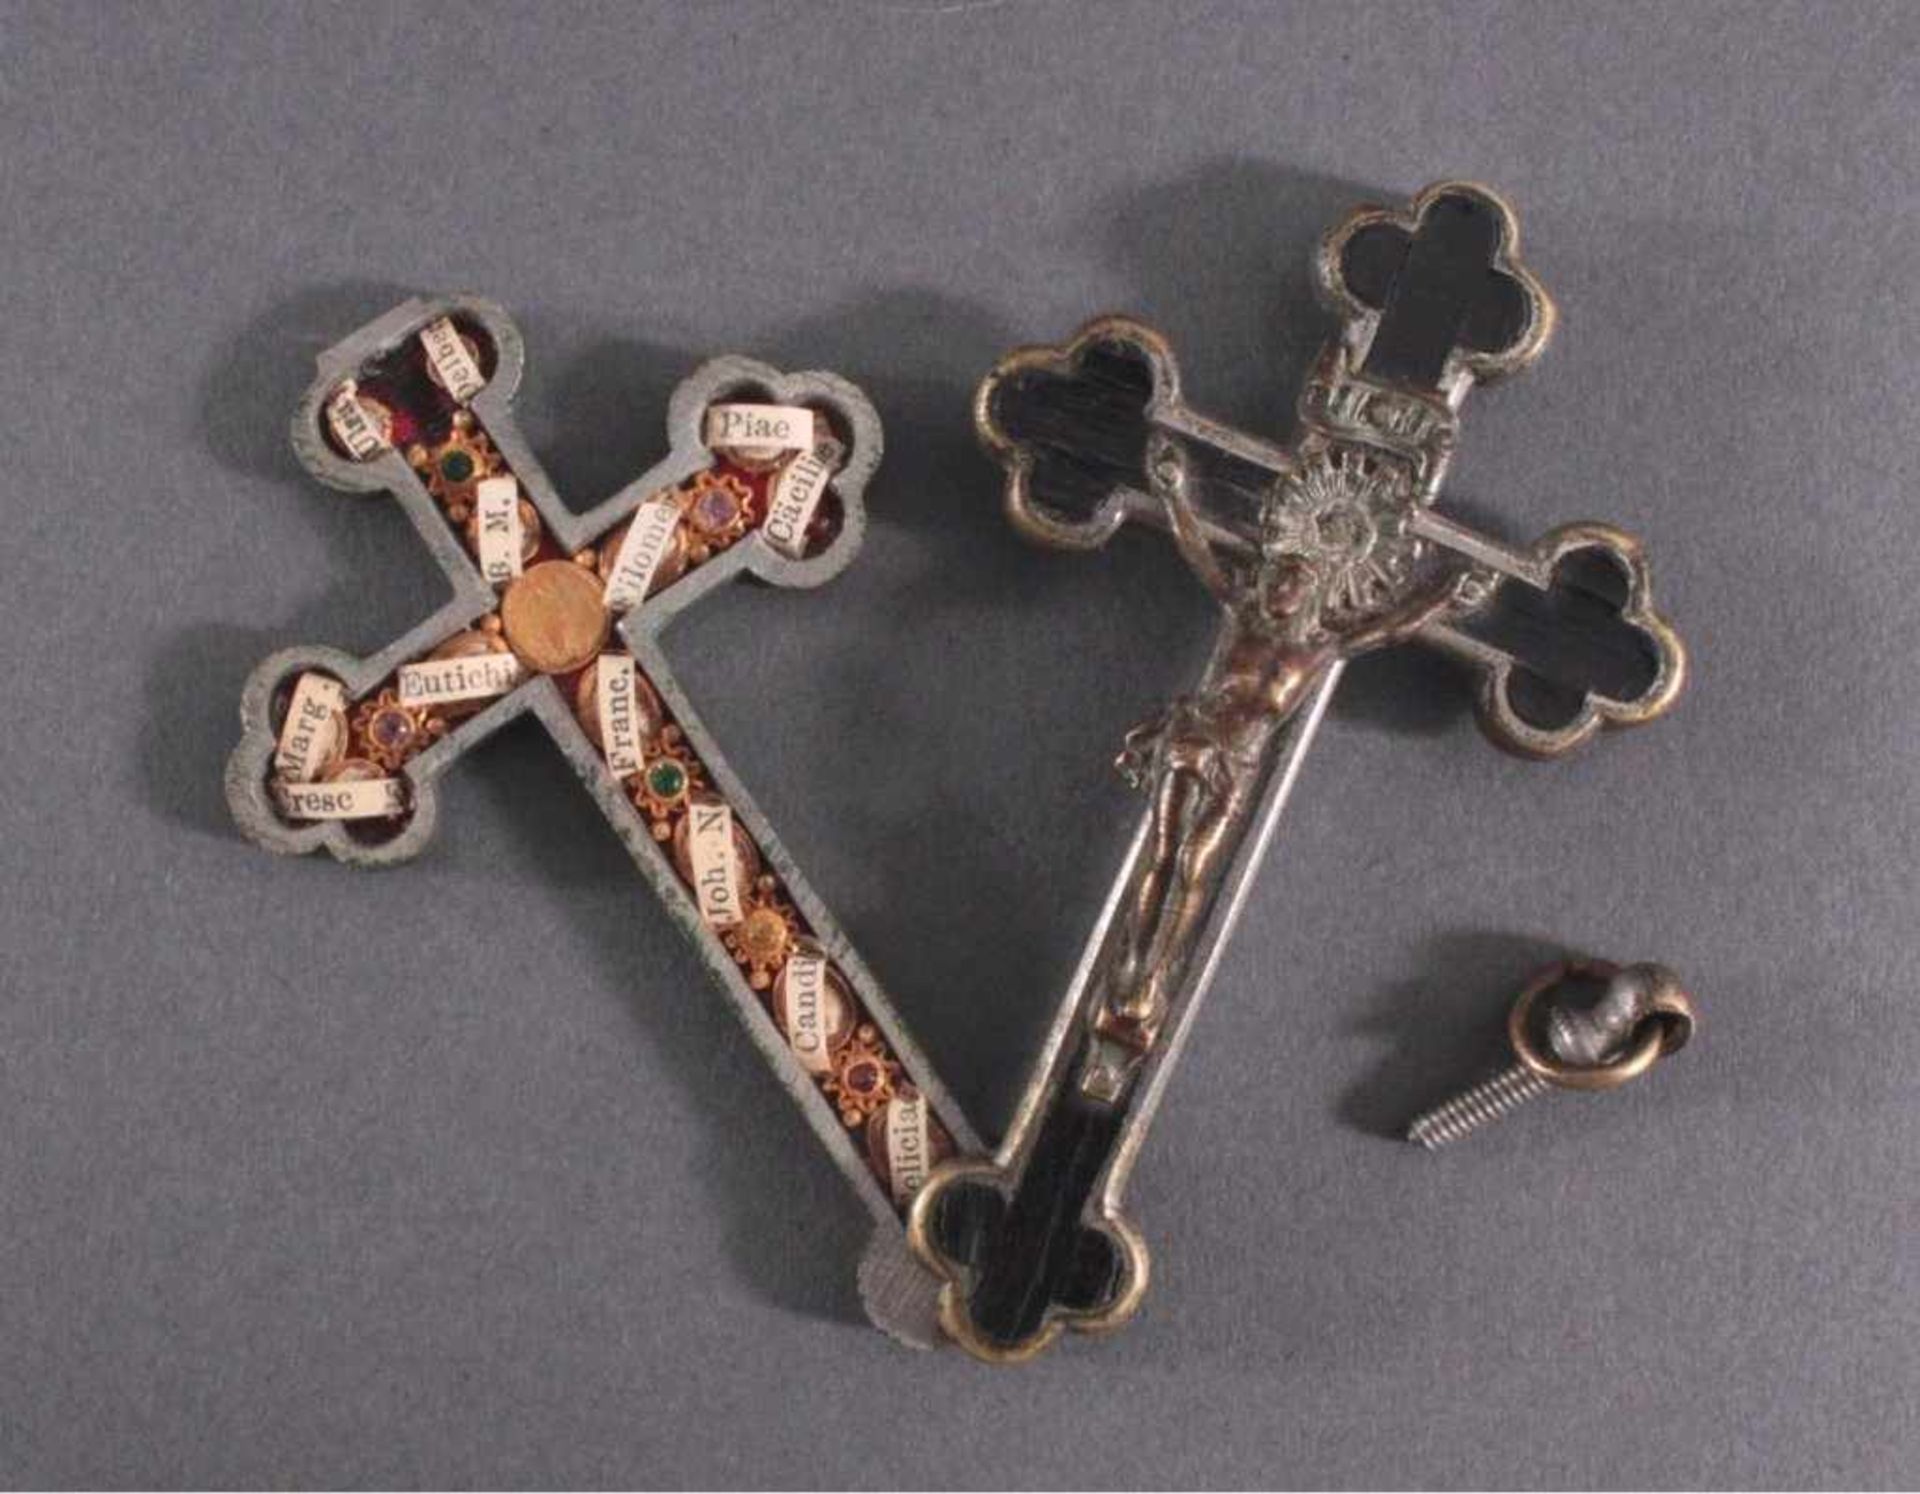 Klosterarbeit - Reliquienkreuz, 19. JahrhundertMessing. Zum Öffnen als Reliquienkreuze, darin